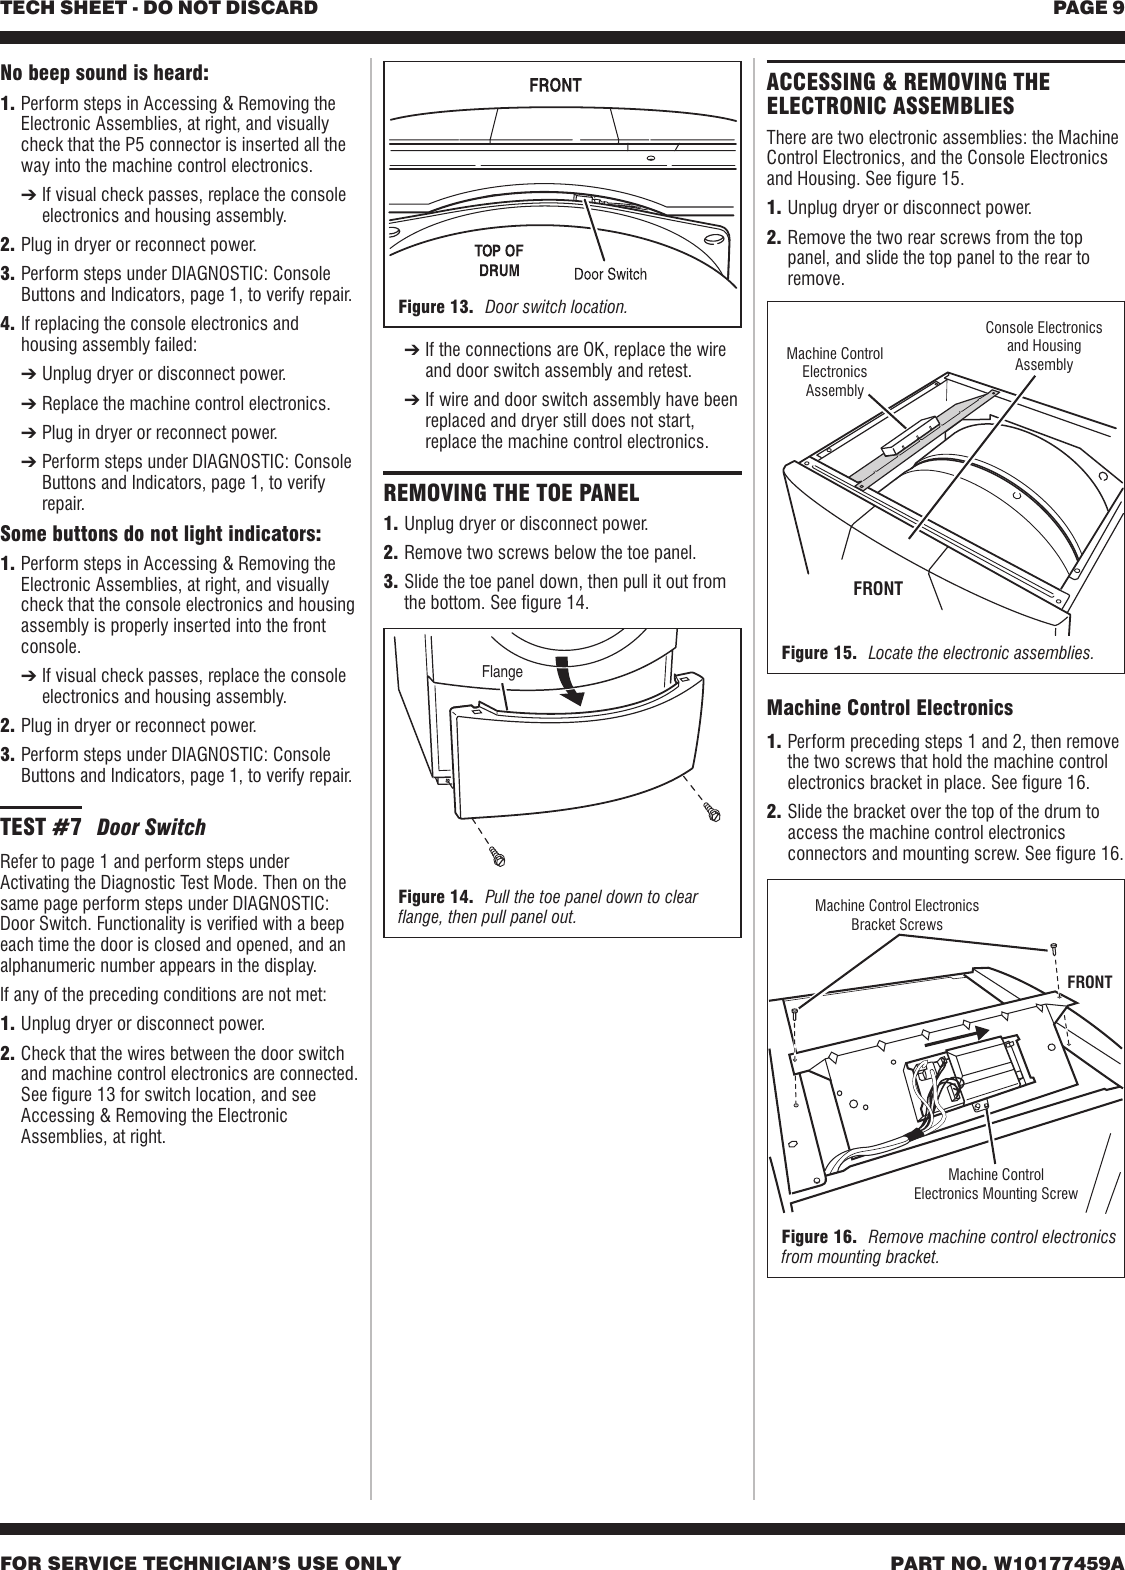 Page 9 of 12 - ZB80281_W10177459A.vp  W10177459A - Whirlpool Duet Sport Dryer Tech Sheet